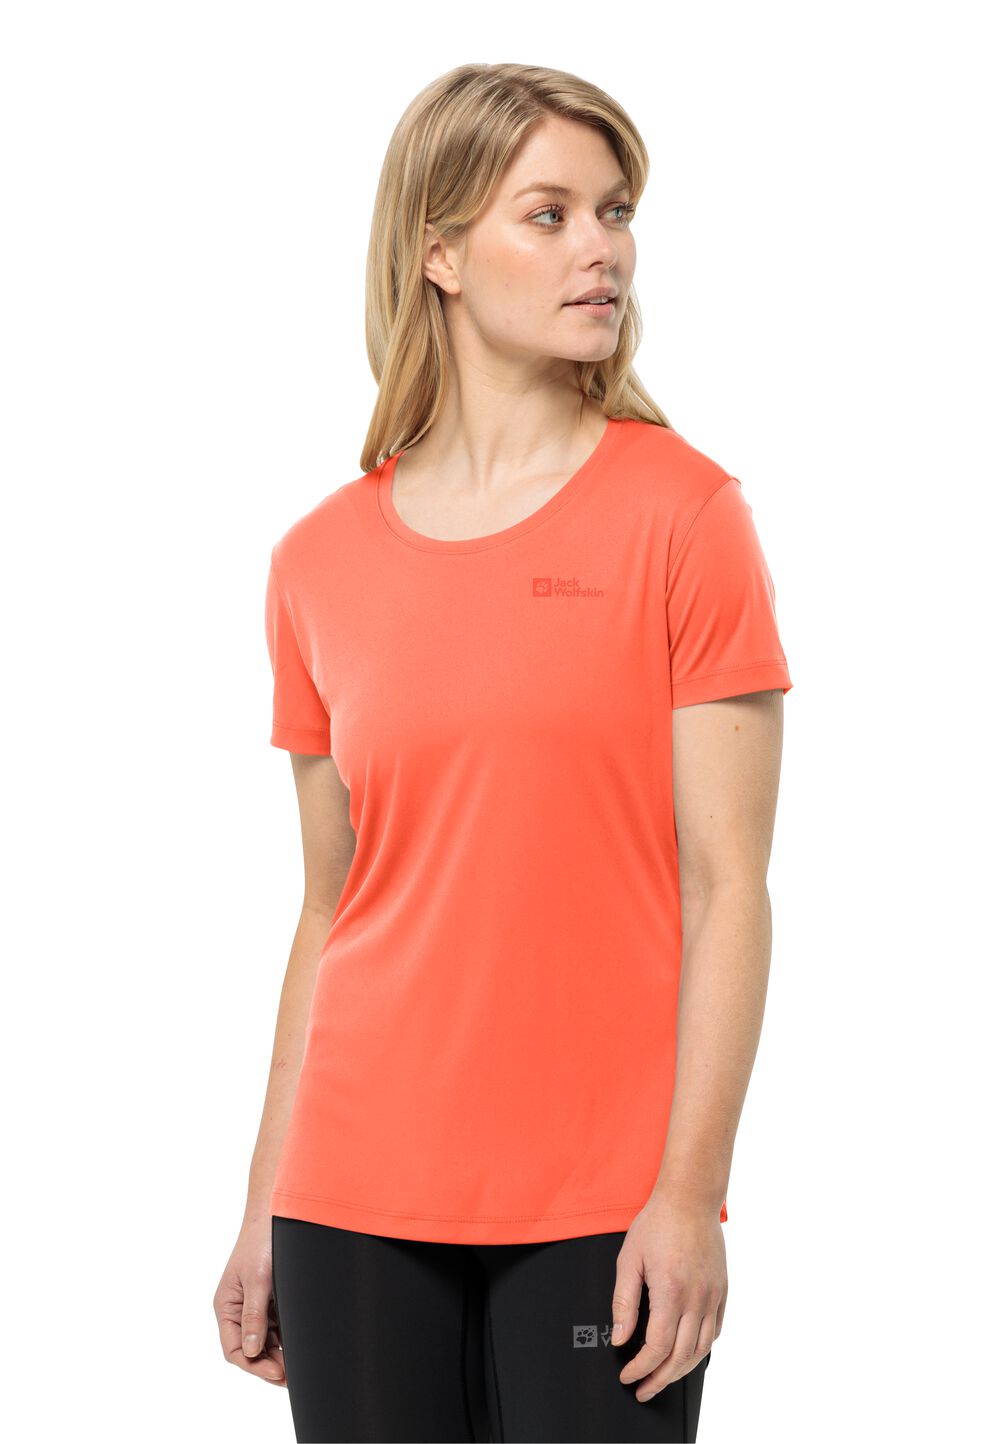 Jack Wolfskin Tech T-Shirt Women Functioneel shirt Dames XXL rood digital orange